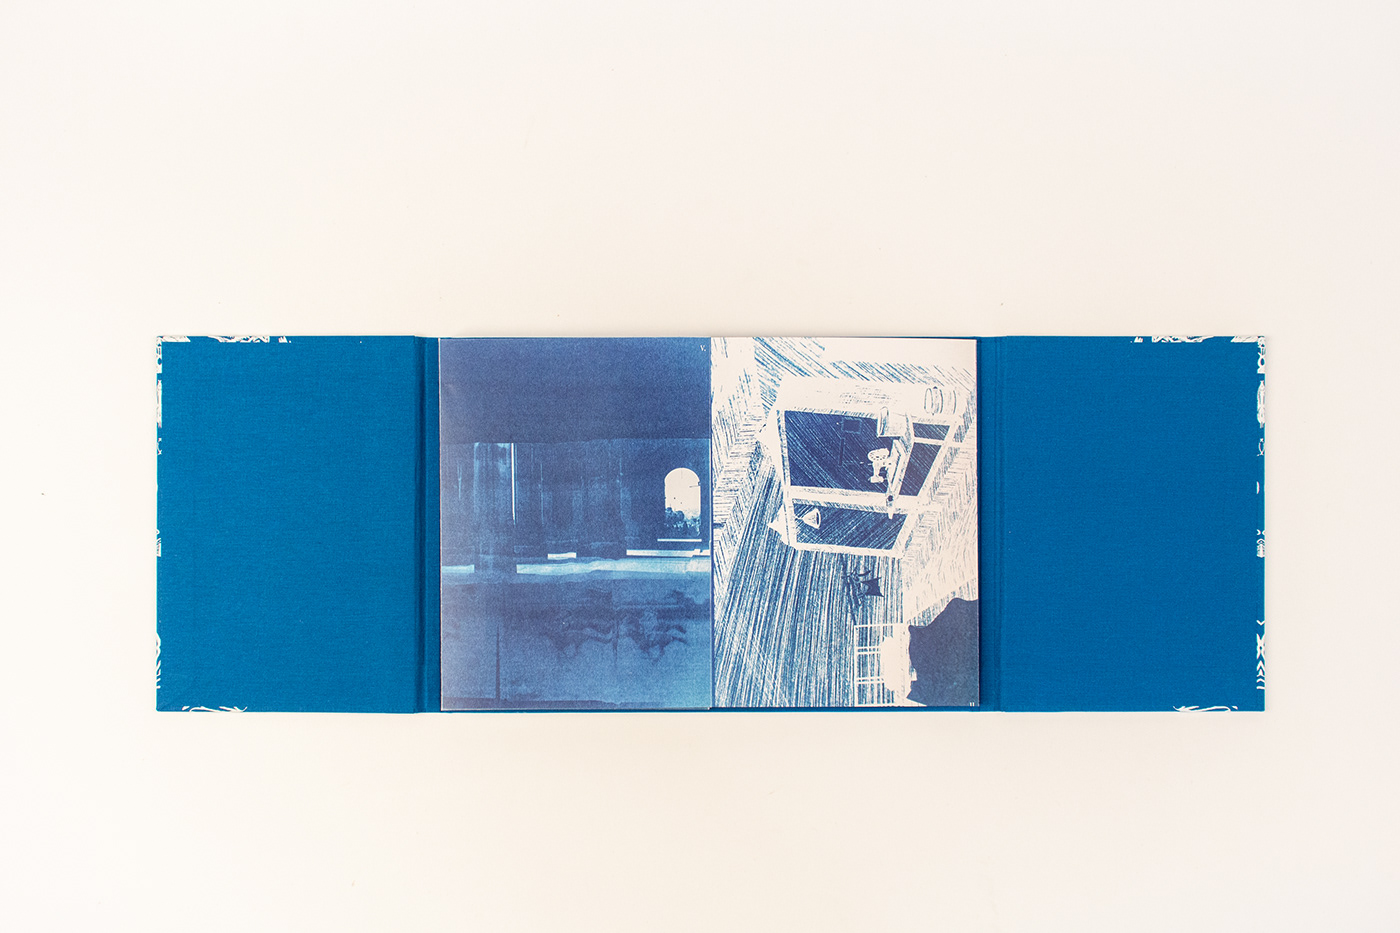 book editorial print oldphoto Blueprint cyanotype alternative process analog leporello